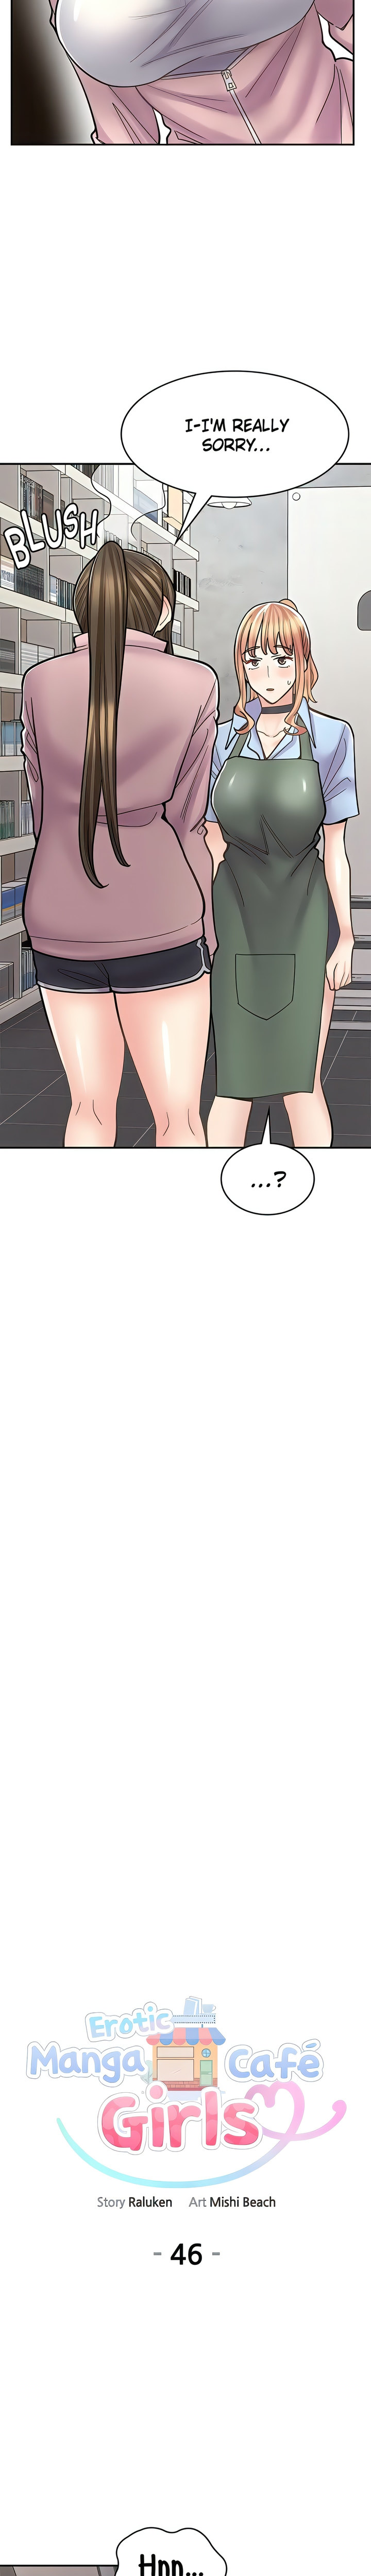 Erotic Manga Café Girls - Chapter 46 Page 3